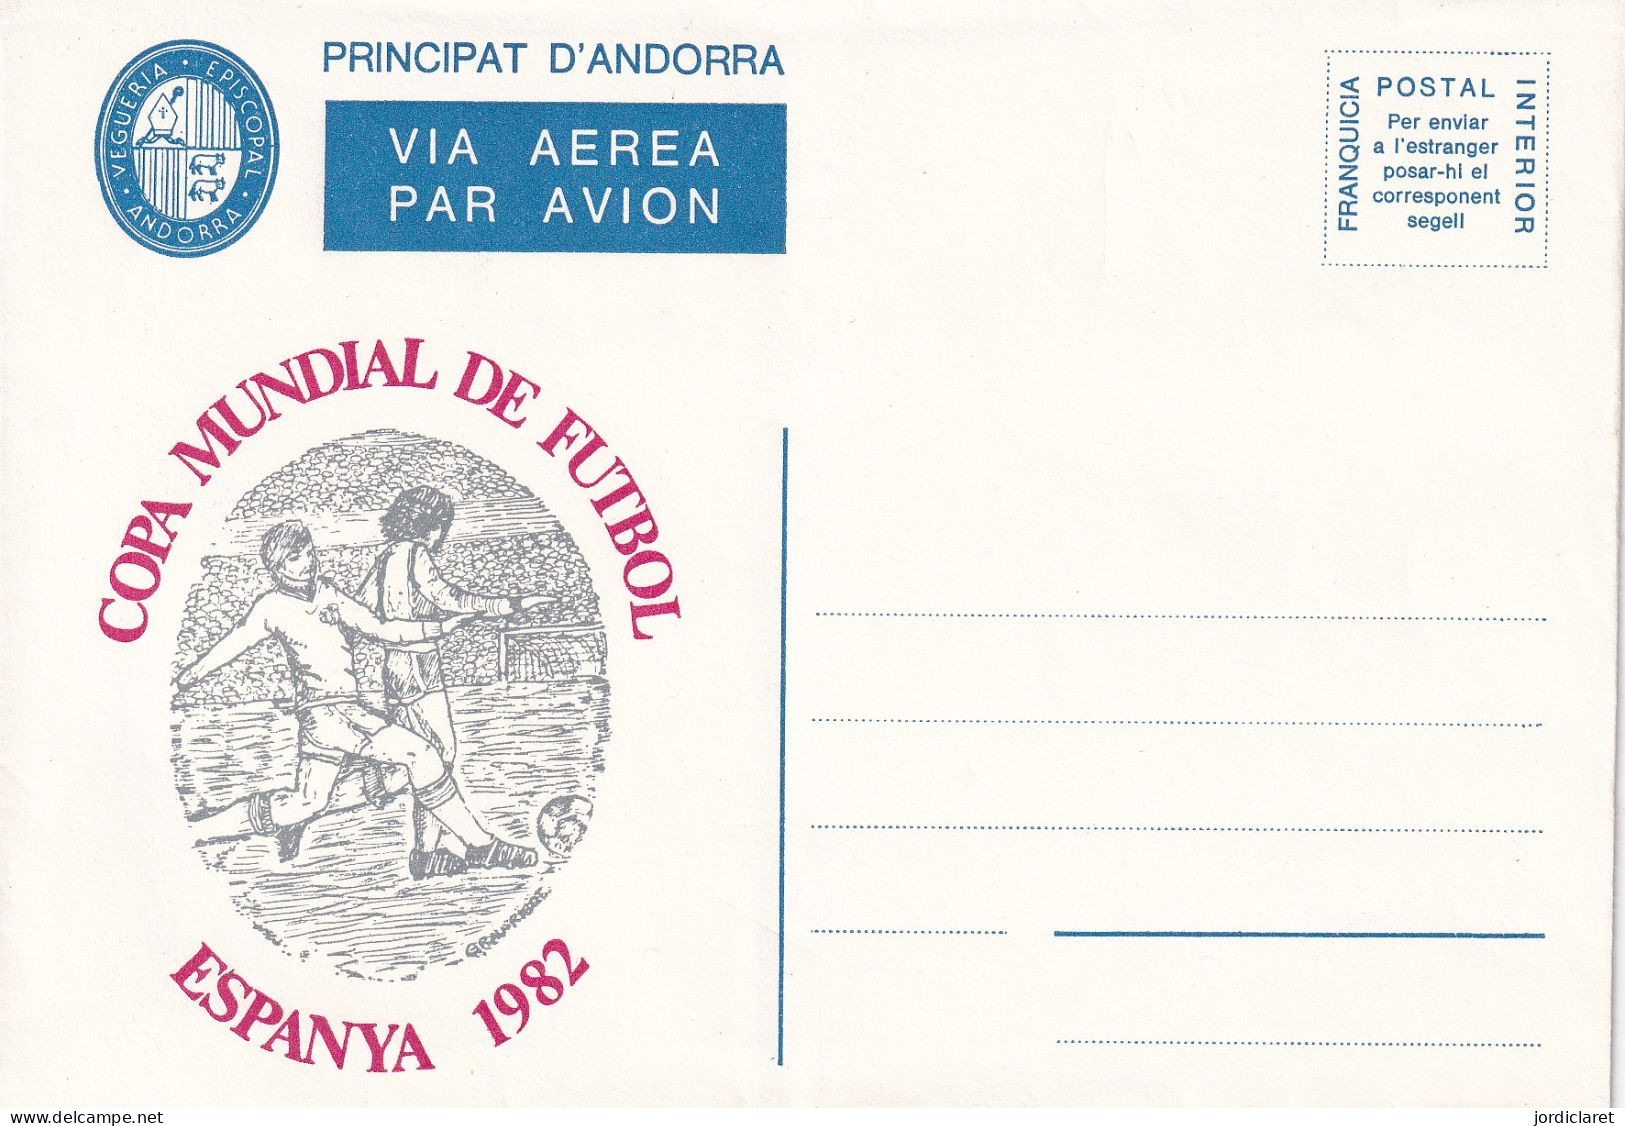 FRANQUICIA INTERIOR ESPAÑA 1982  FUTBOL - Episcopale Vignetten